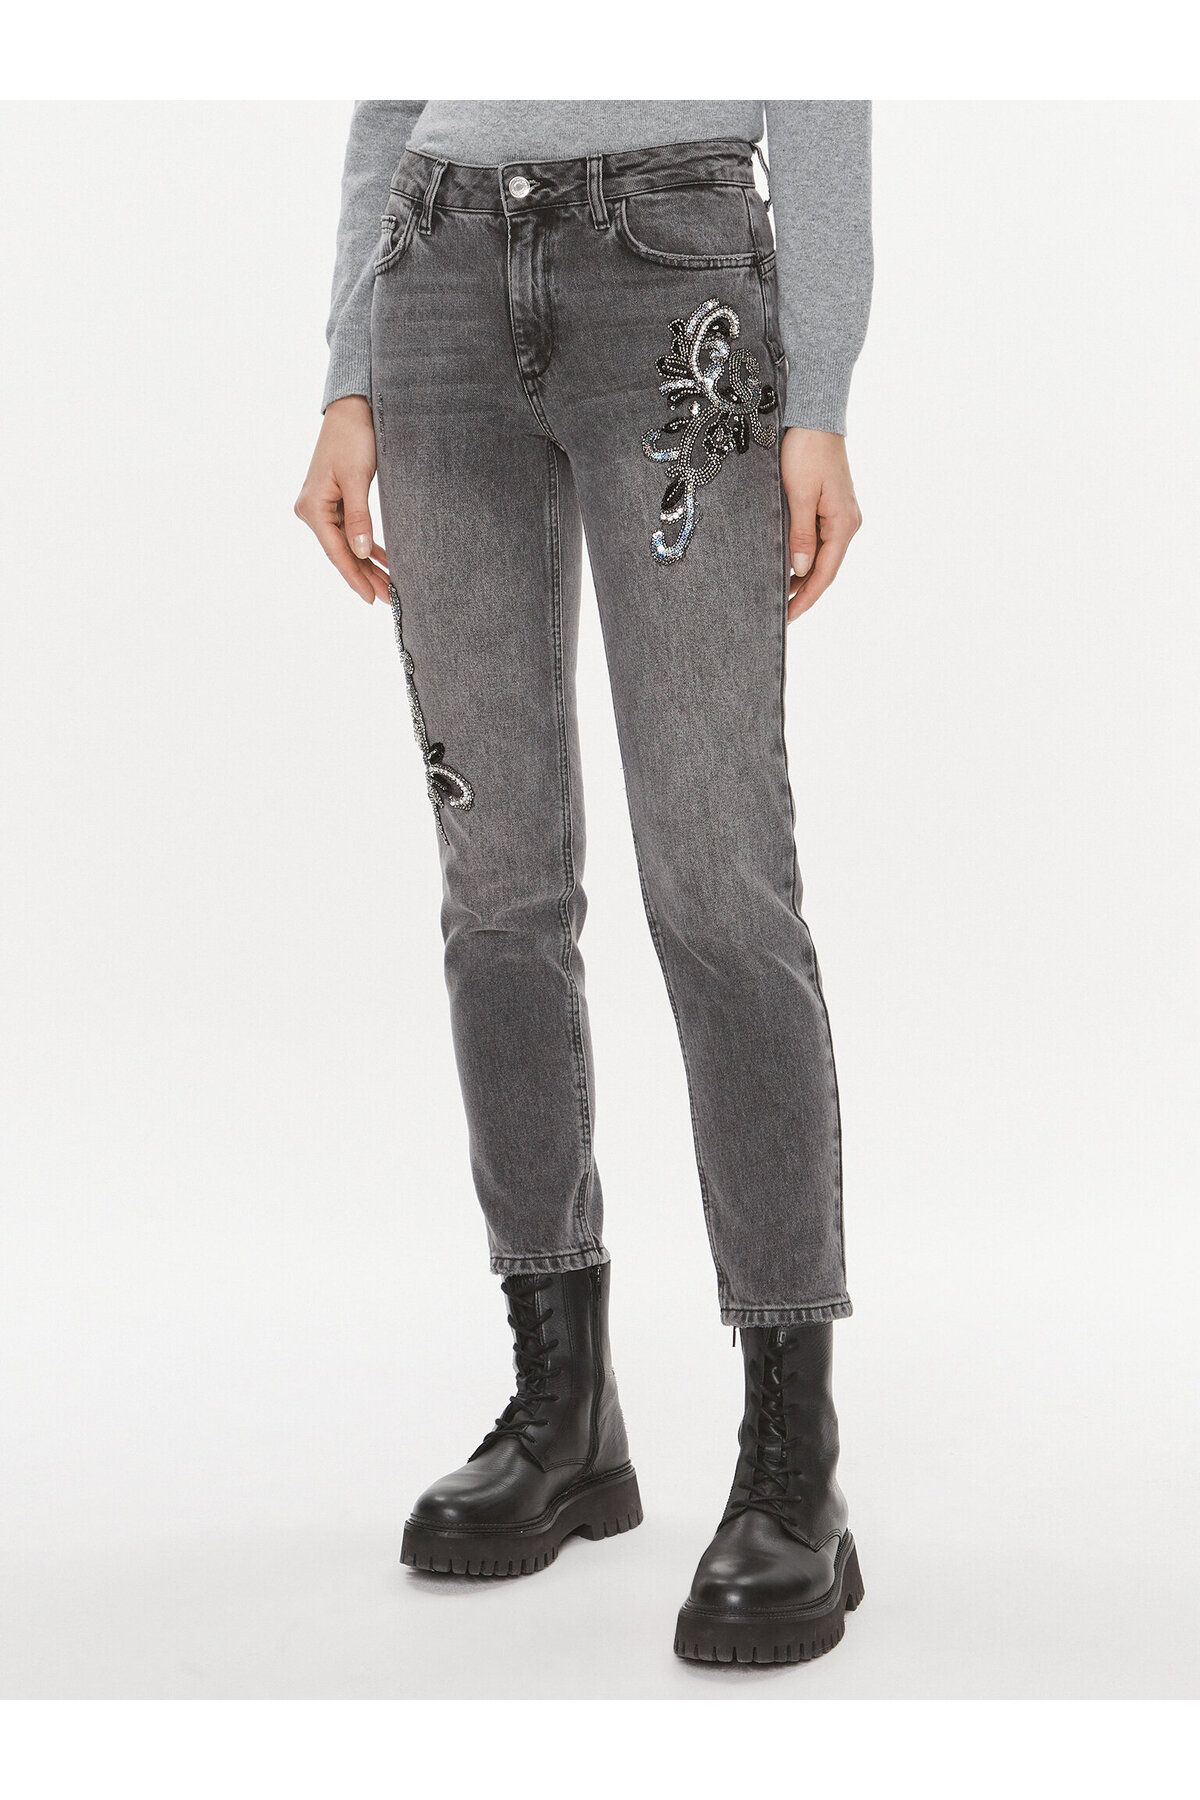 Liu Jo Kadın Yüksek Bel Süper Skinny Rahat Gri Jeans UF3035D4860-88263